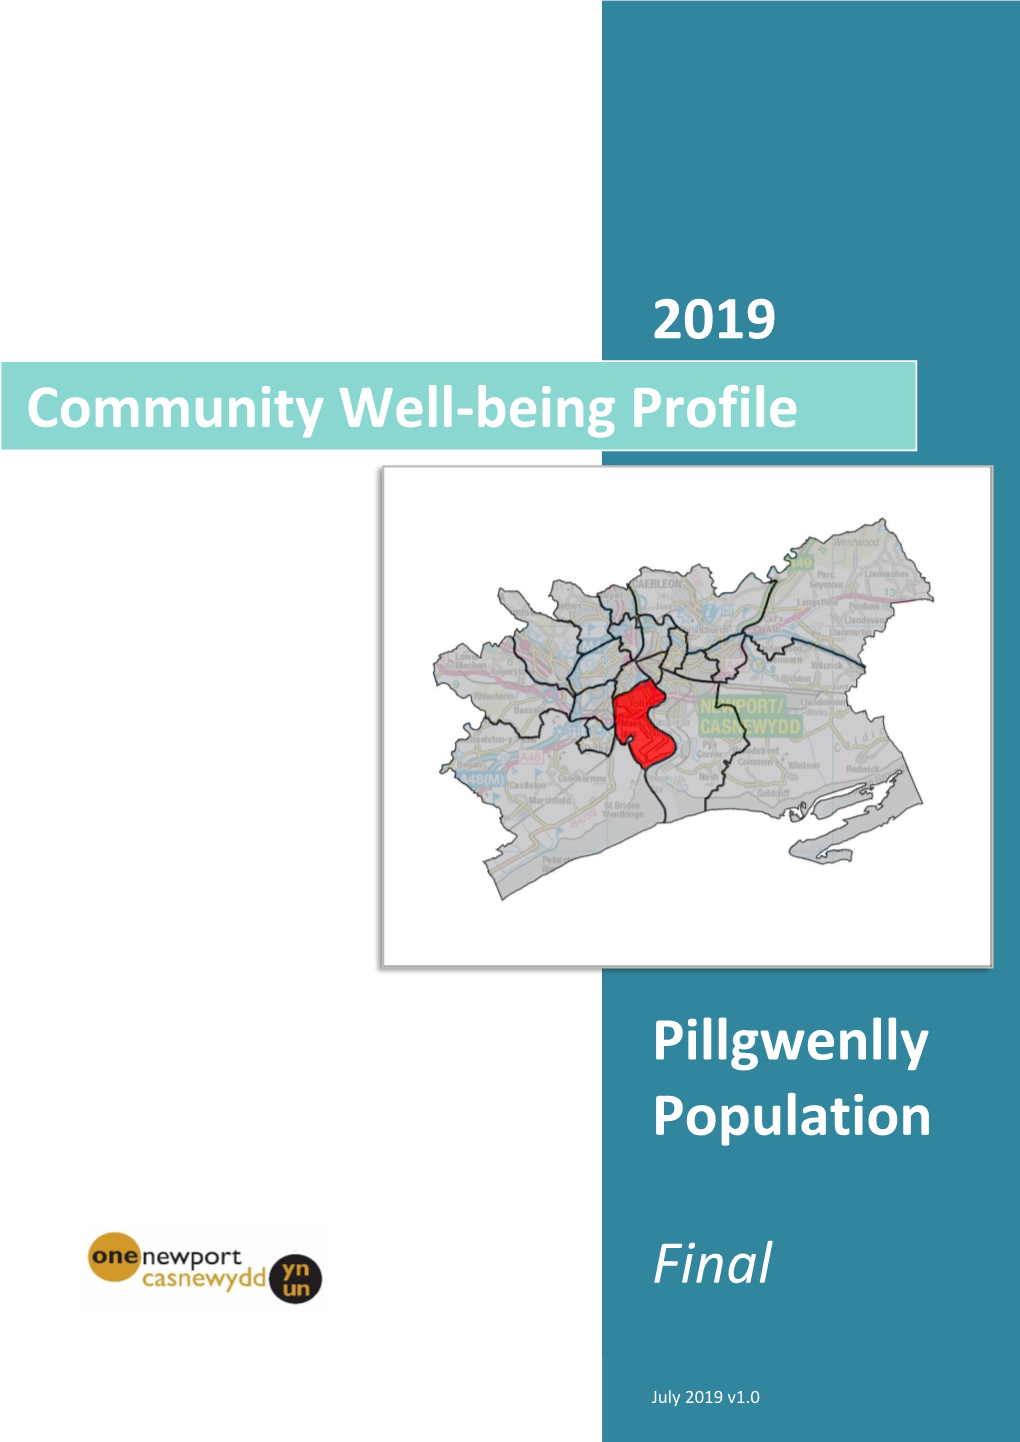 Pillgwenlly Profile 2019 Population